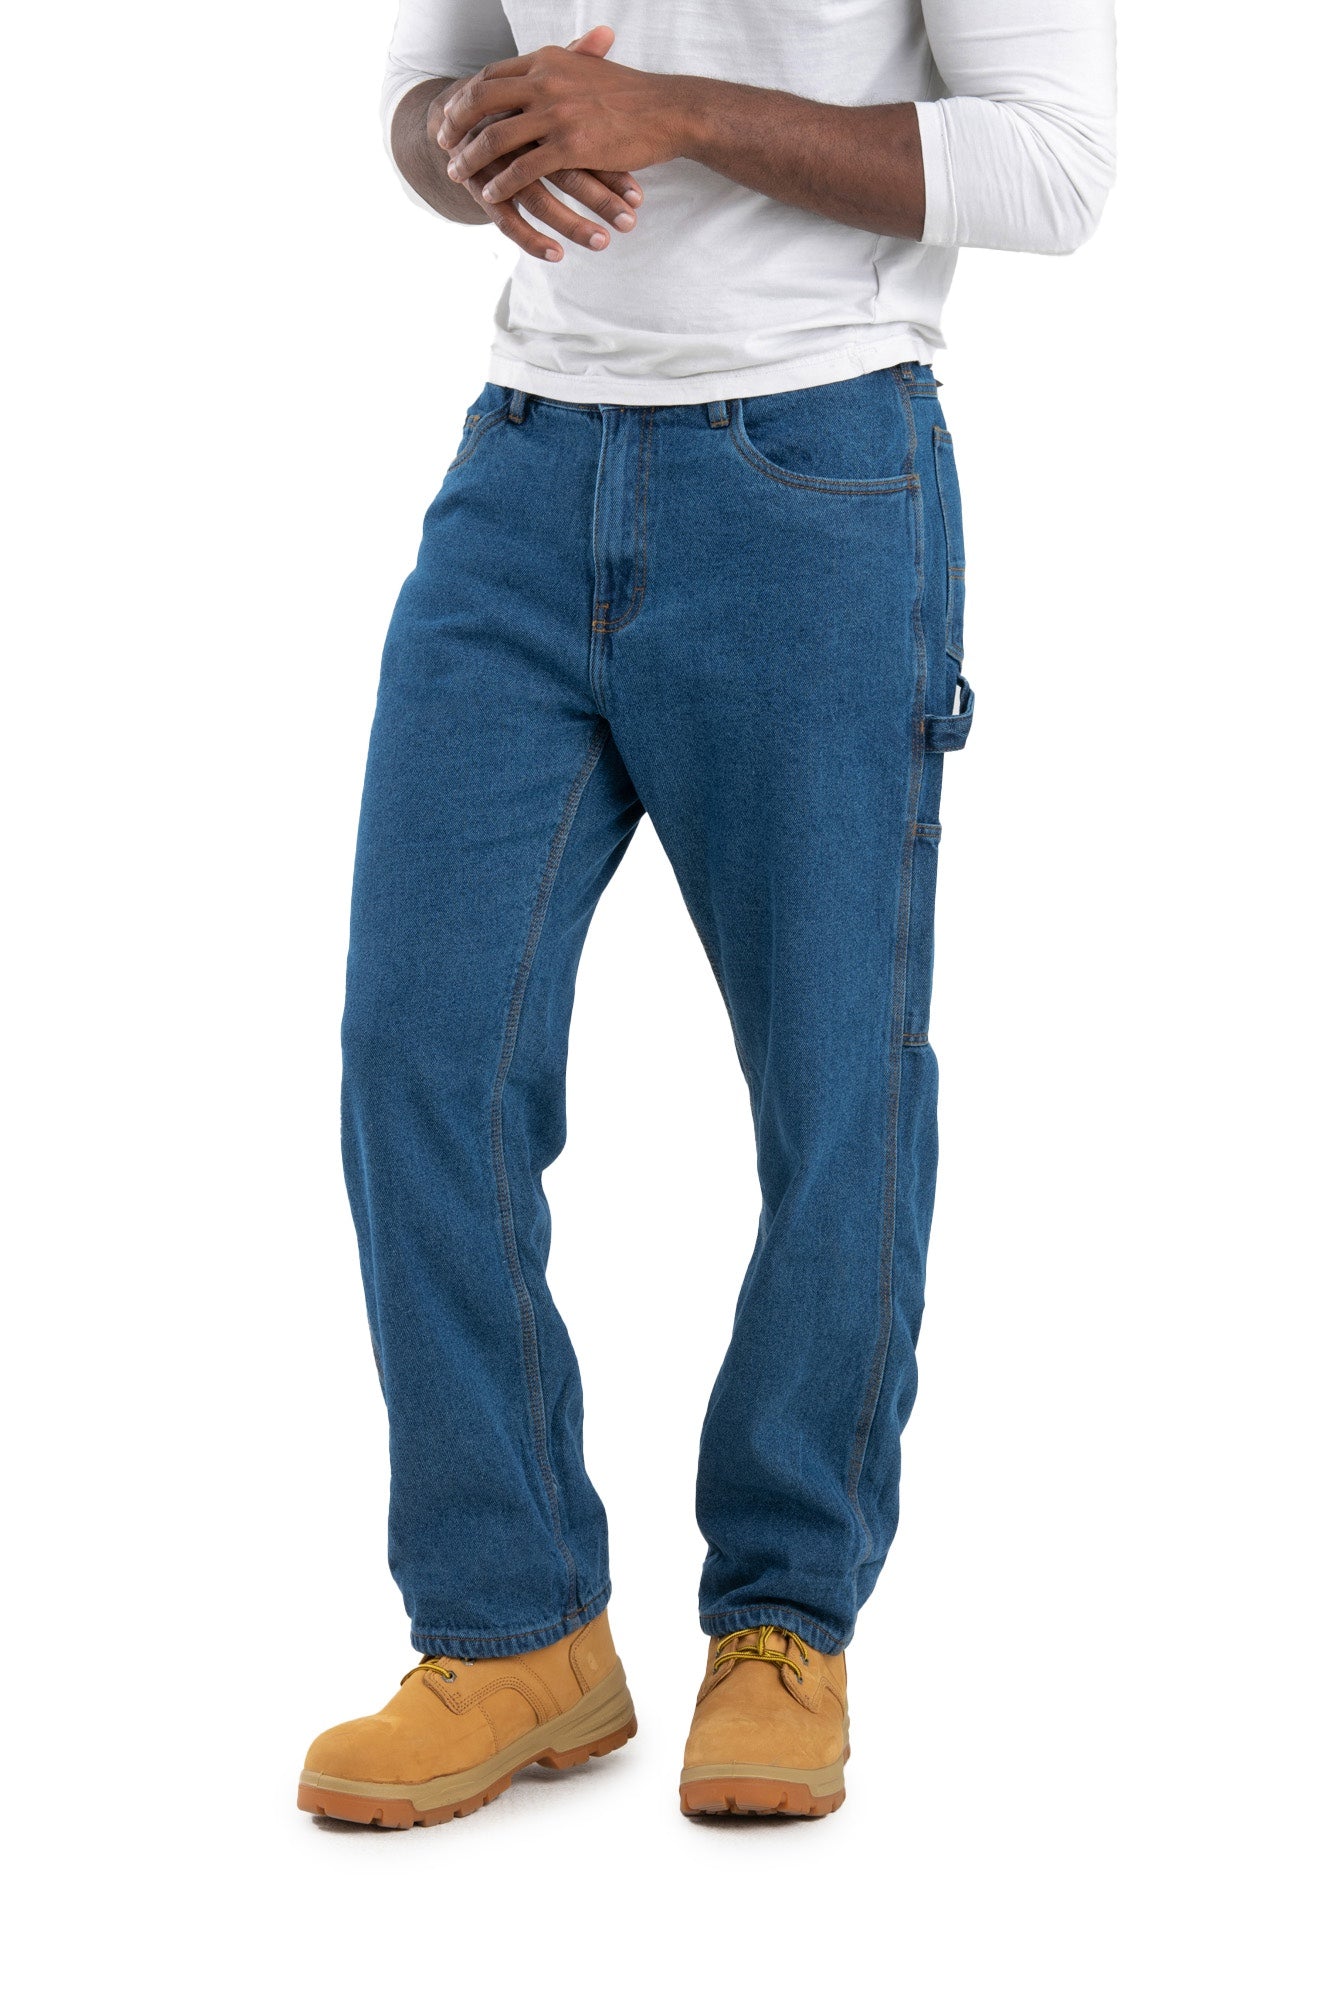 CARHARTT Dungaree Work Pants: Men's, Work Pants, ( 46 in x 32 in ), Blue,  Cotton, Buttons, Zipper